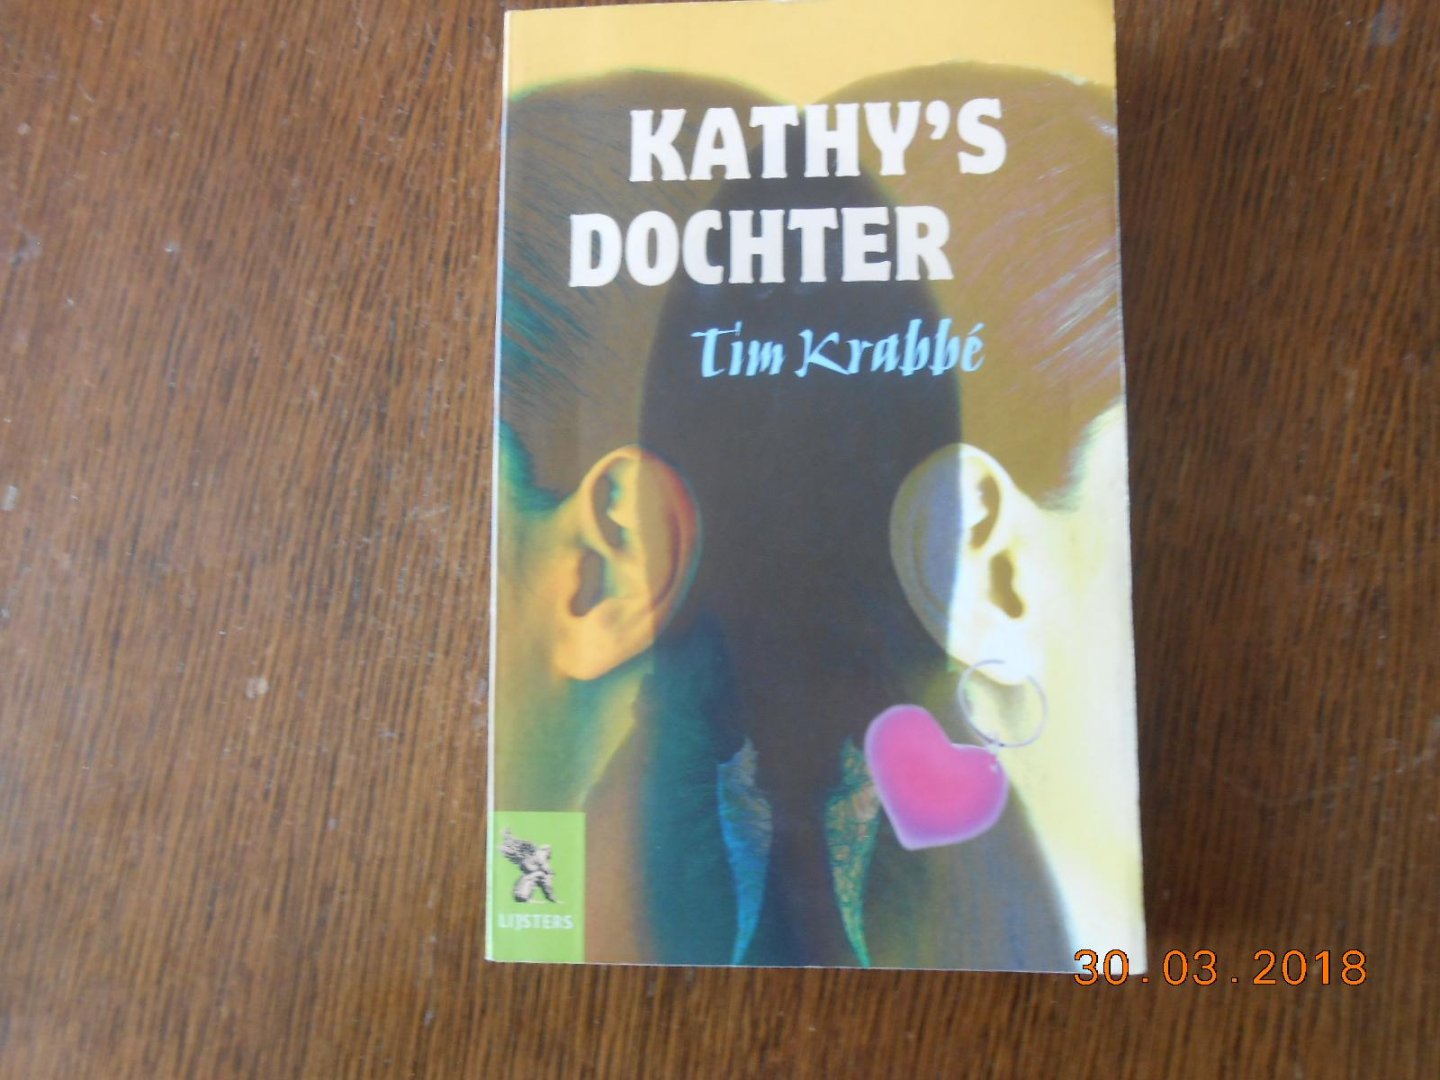 Tim Krabbe - Kathy's dochter